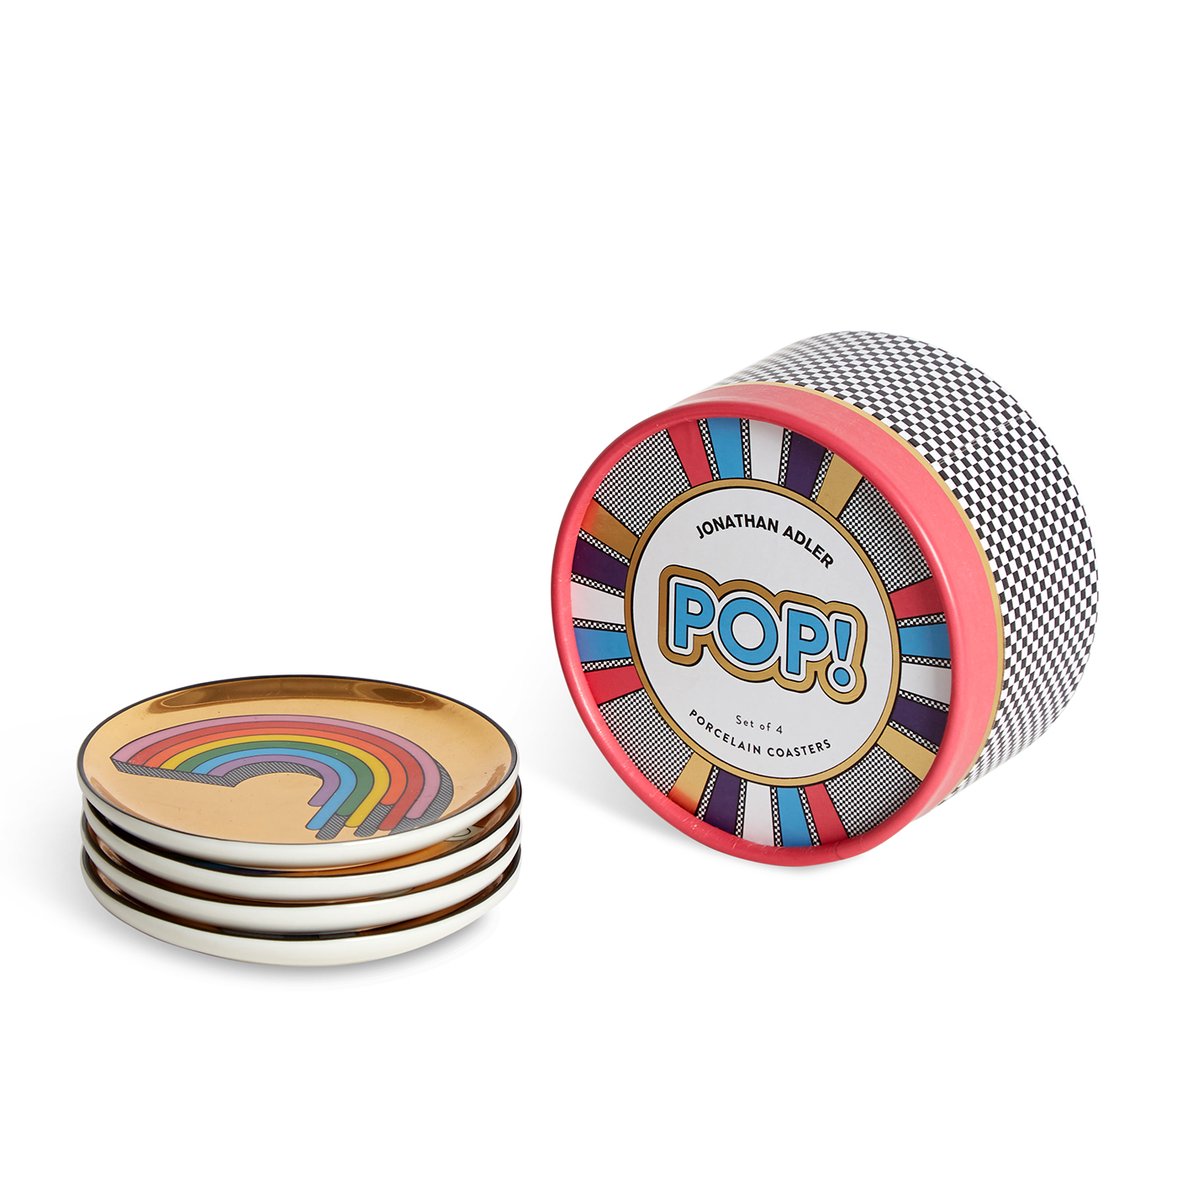 POP! Coasters. Jonathan Adler